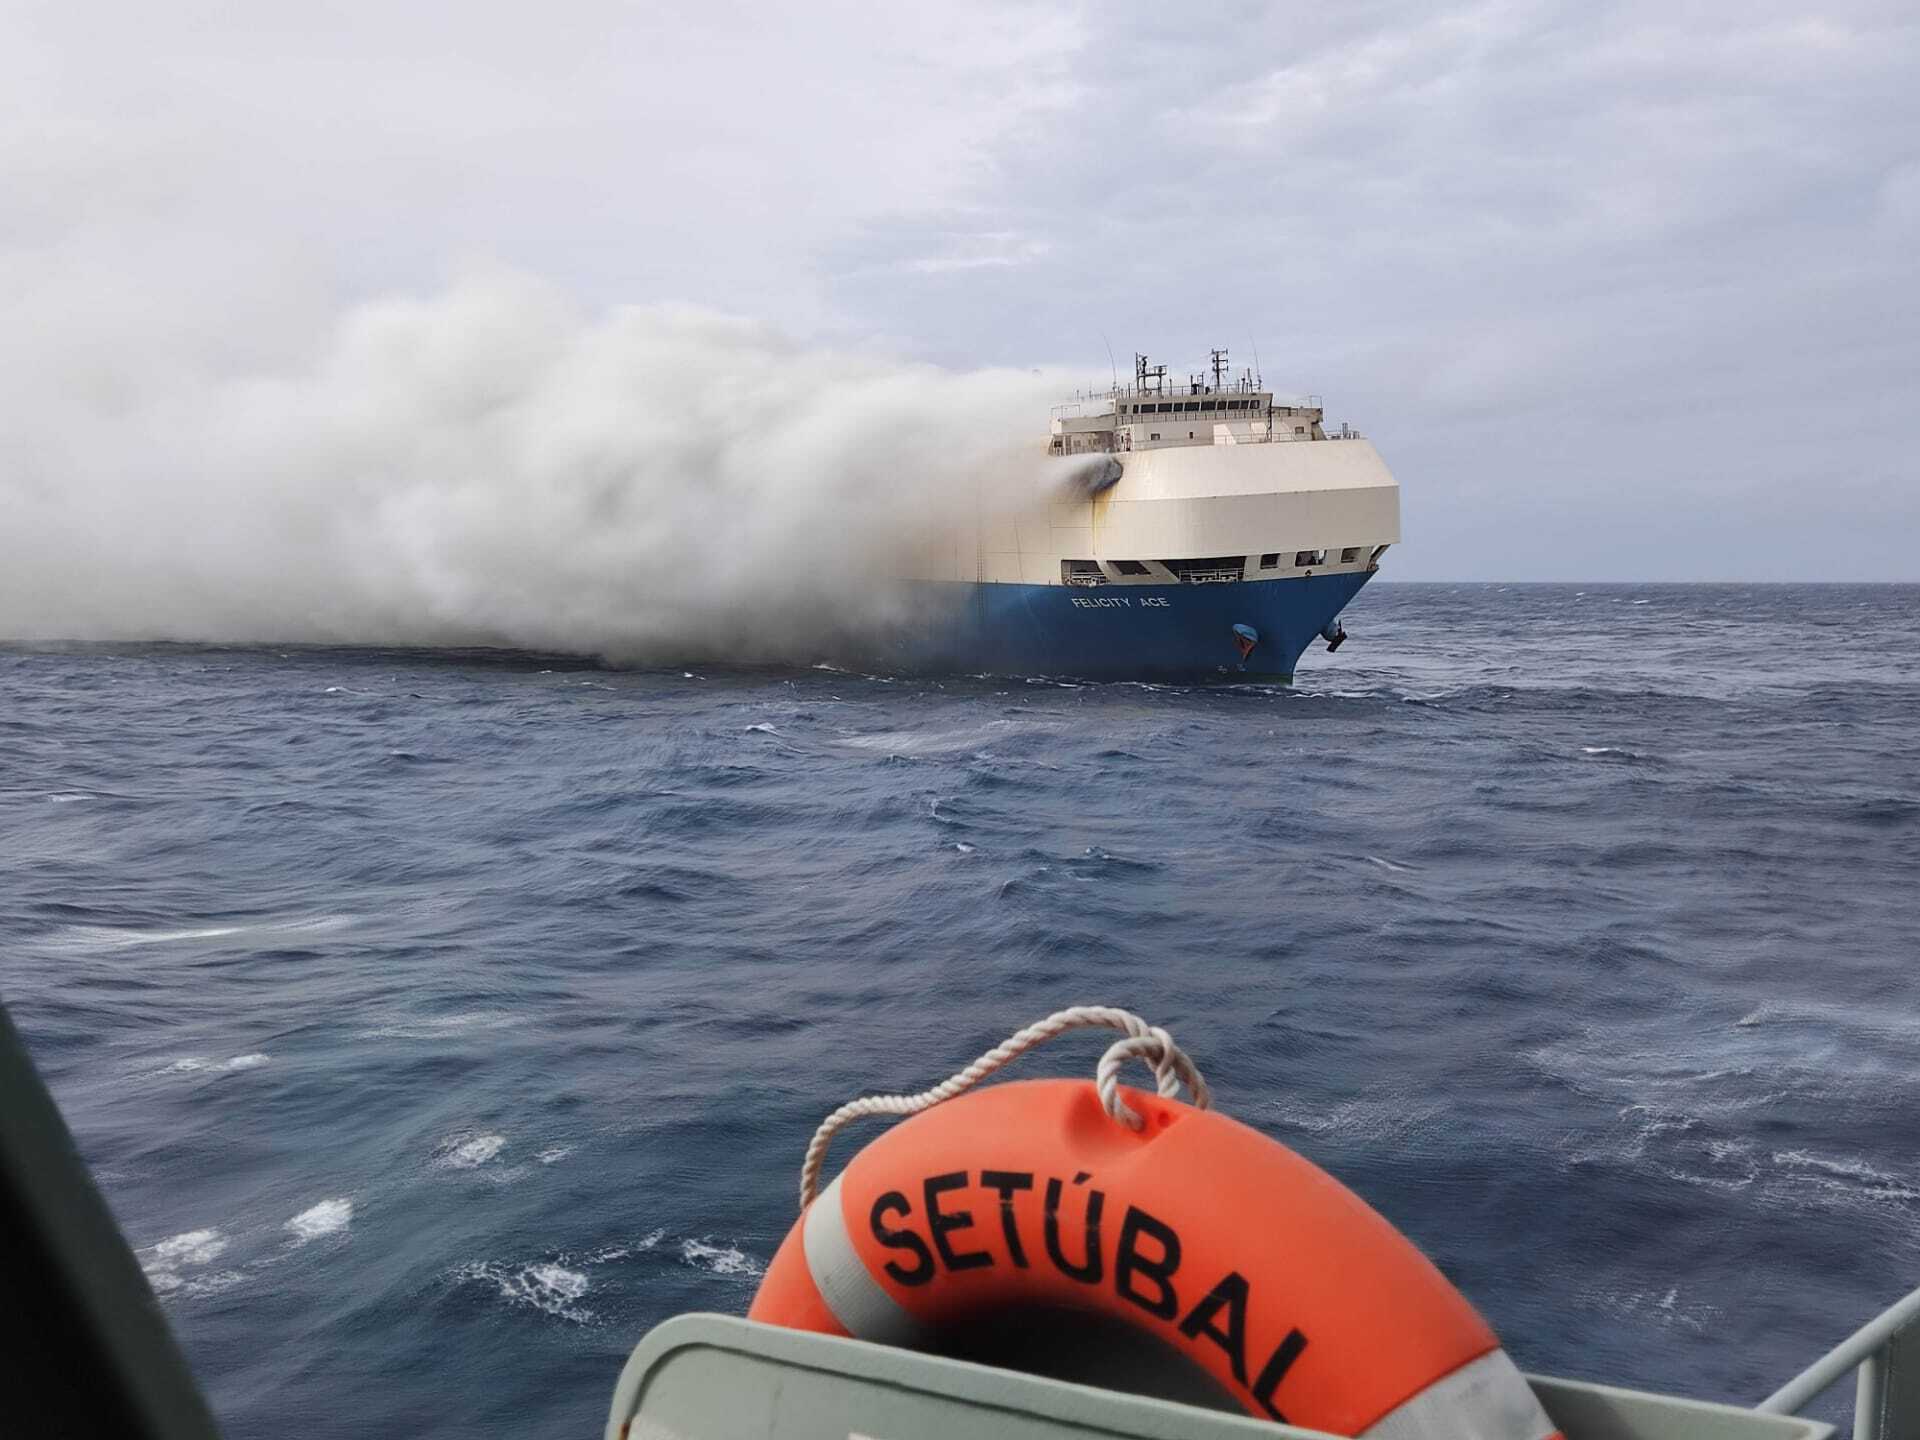 Vessel Carrying Luxury Cars Sinks in Atlantic Ocean 13 Days After Fire